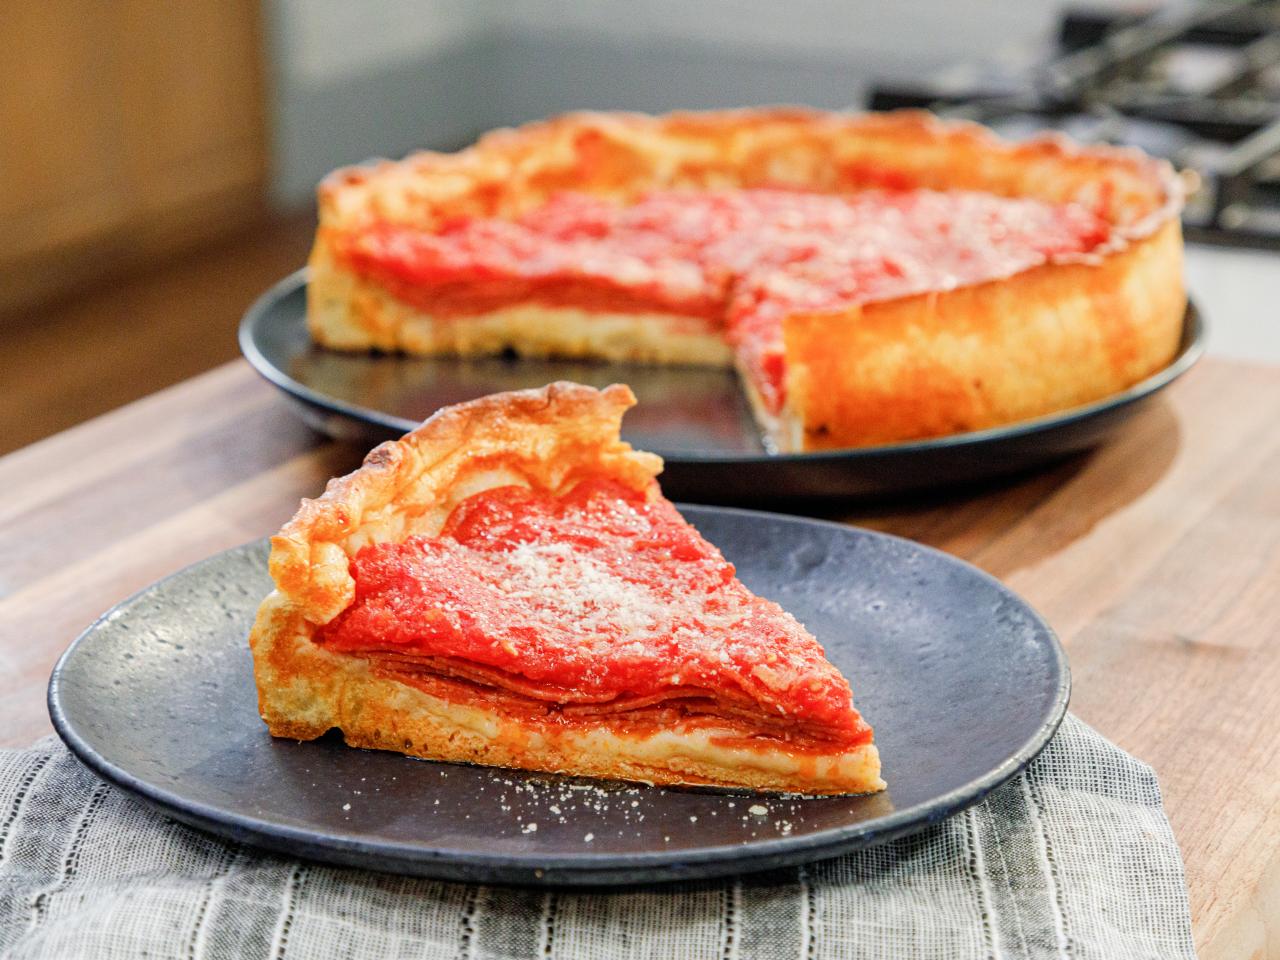 https://food.fnr.sndimg.com/content/dam/images/food/plus/fullset/2020/03/19/0/FNP_Mauro-Chicago-Style-Deep-Dish-Pizza-Into_s4x3.jpg.rend.hgtvcom.1280.960.suffix/1584645771183.jpeg